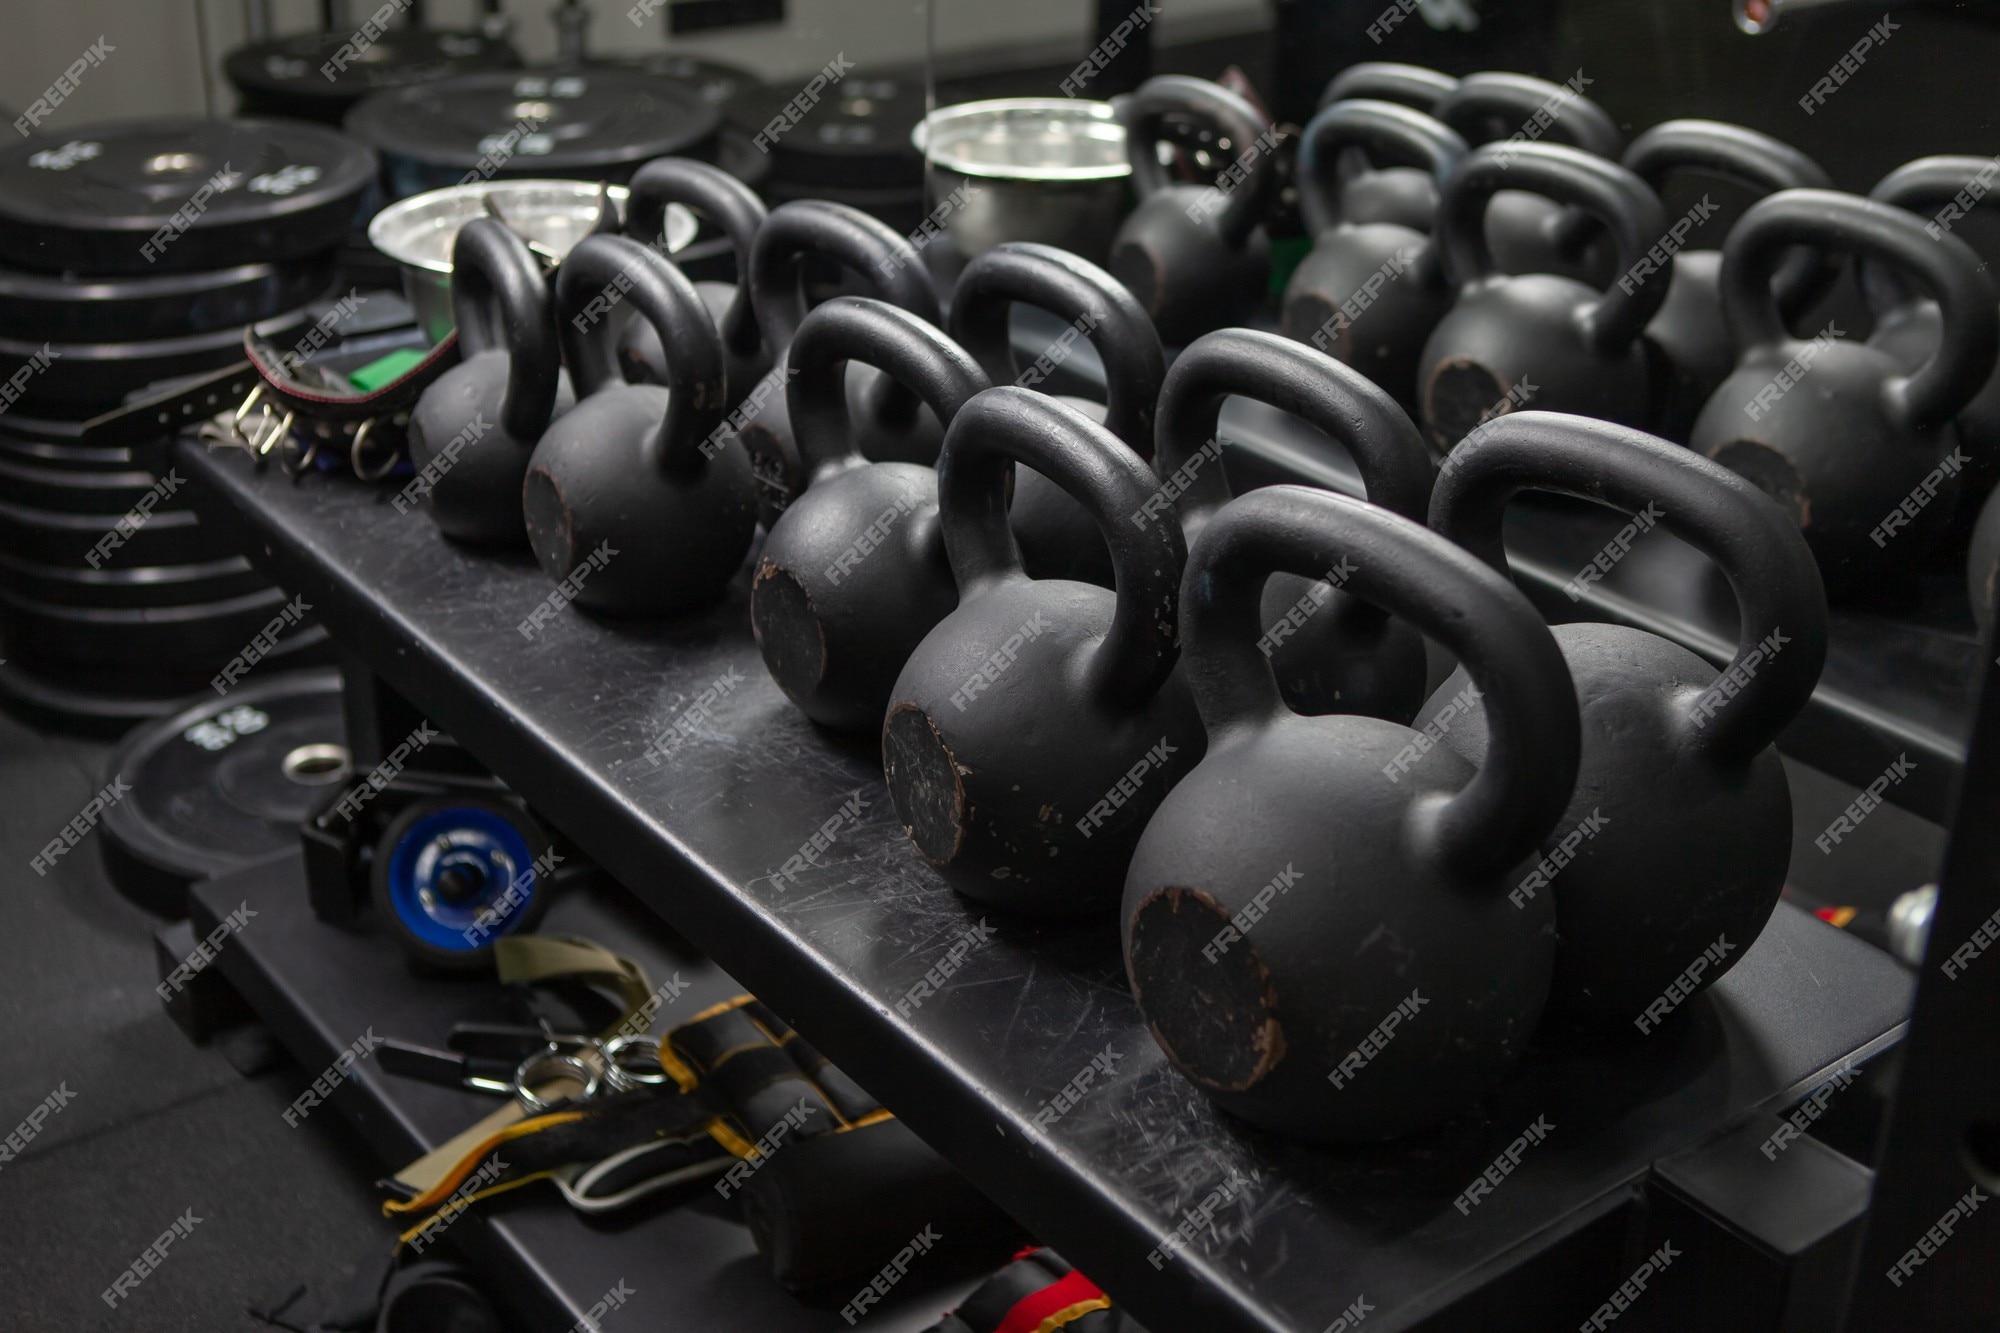 https://img.freepik.com/premium-photo/bodybuilding-free-weight-equipment-rack-with-kettlebells-fitness-accessories-modern-gym-functional-training_175682-22968.jpg?w=2000